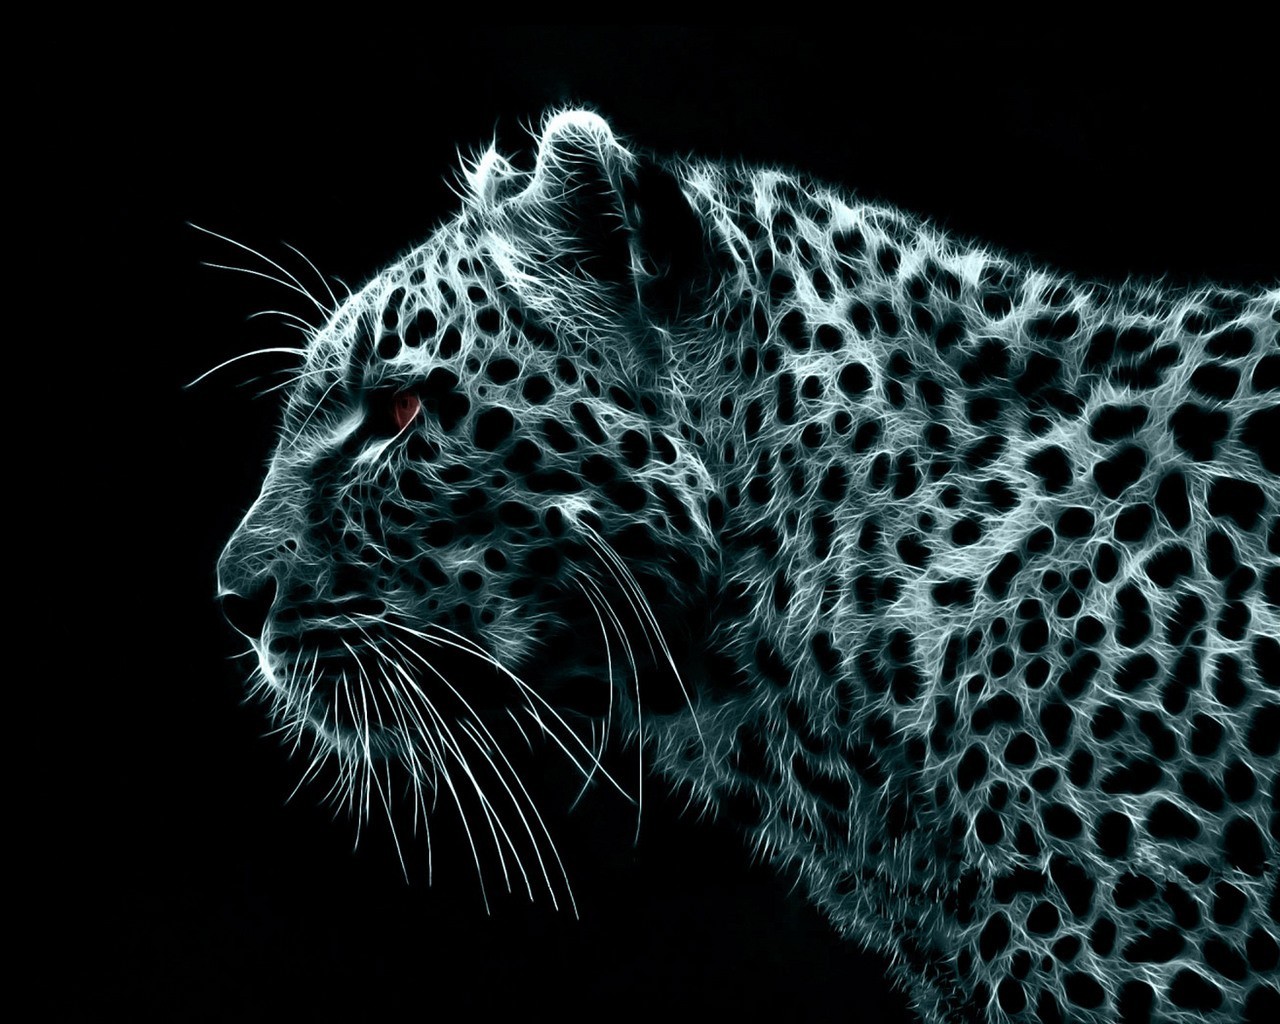 leopard, Black background, Fractalius, Animals, Digital art, Simple background Wallpaper